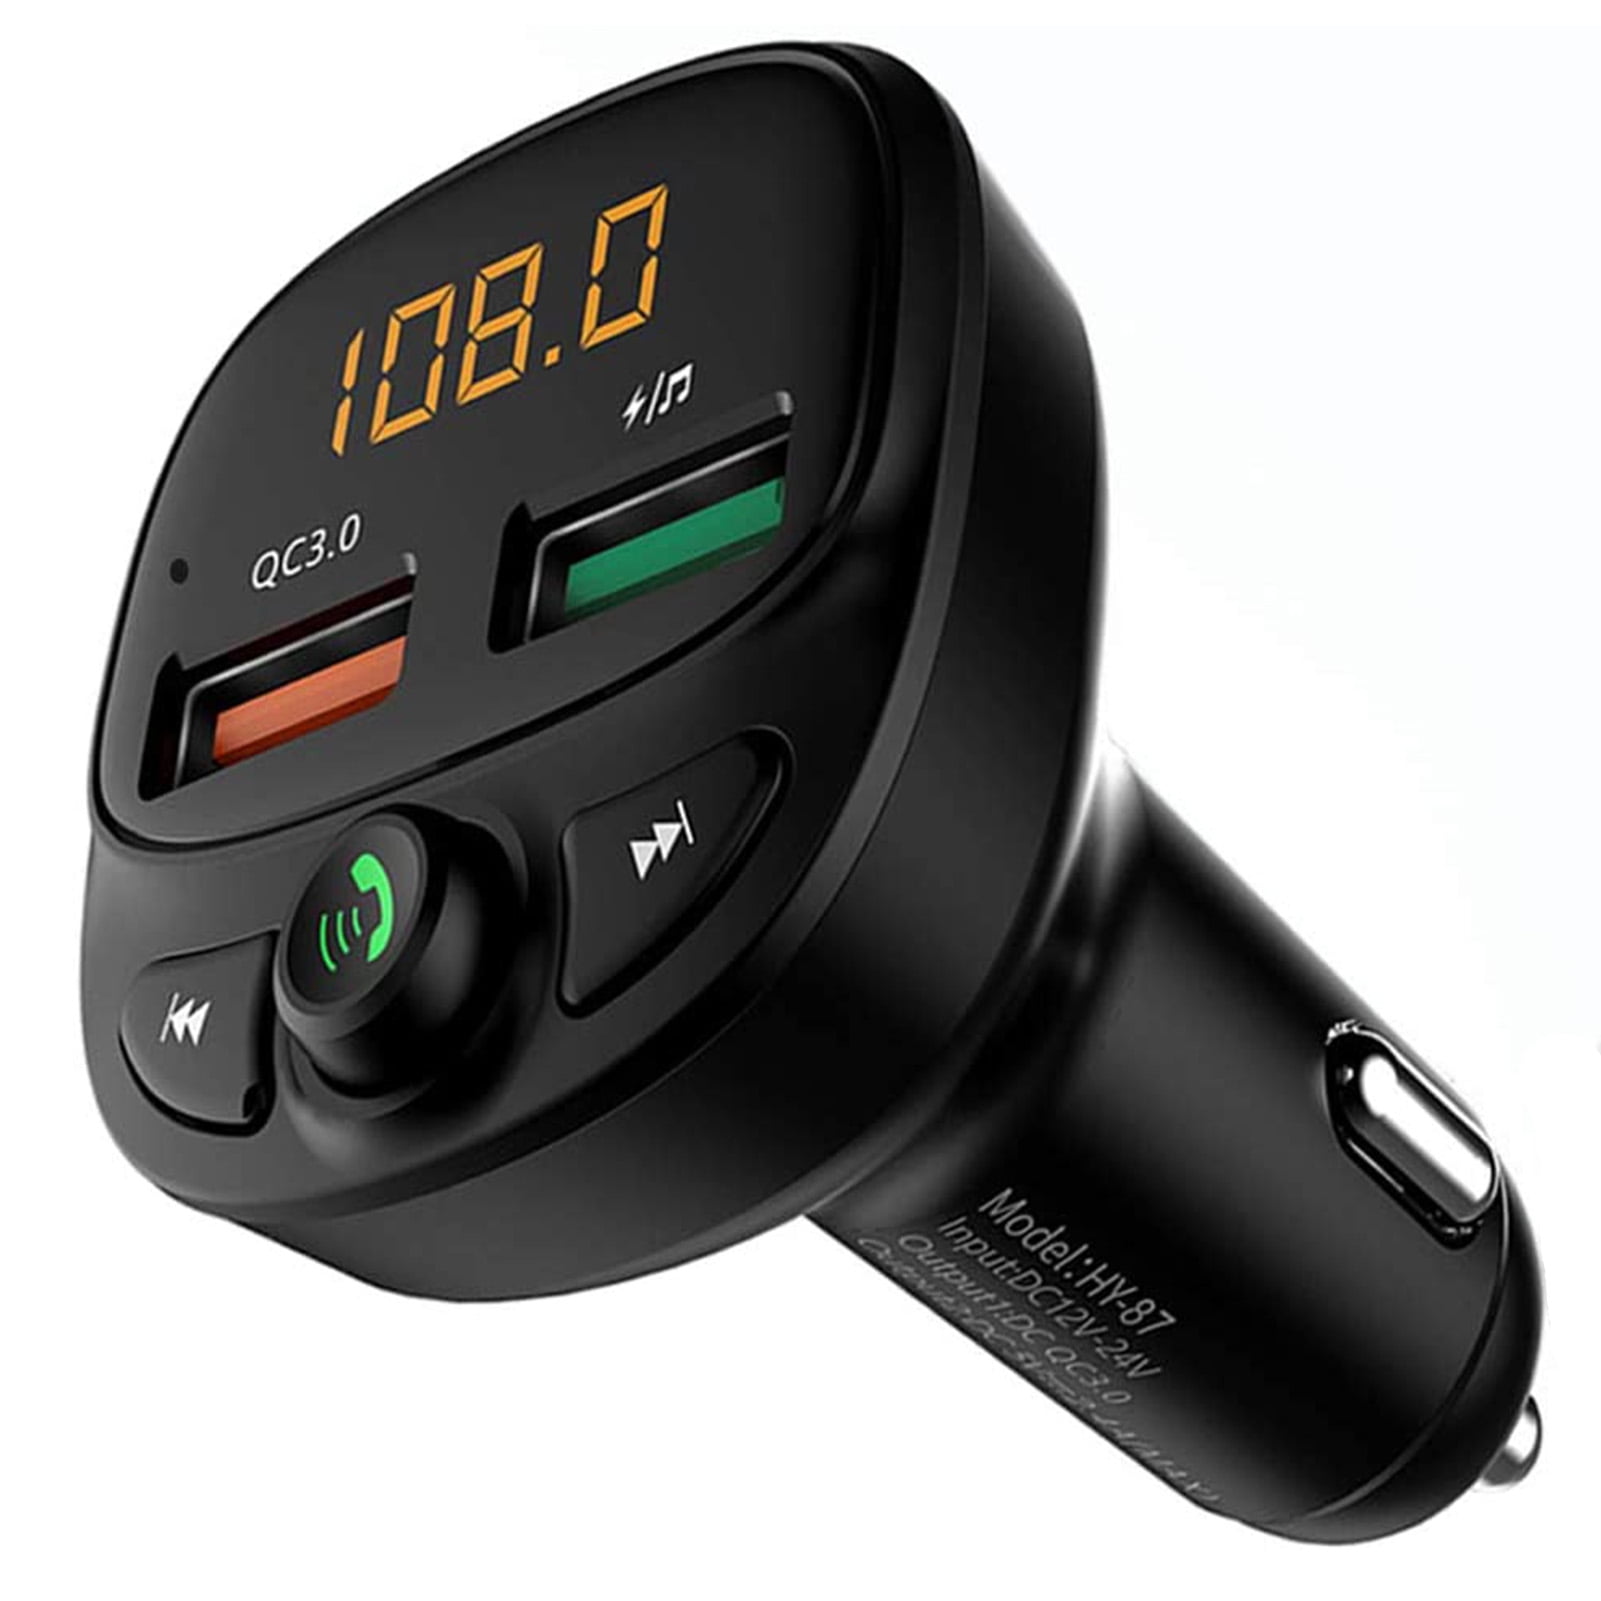 Bluetooth Car Handsfree Kit 2 USB Charger FM Transmitter Wireless Adapter Radio 